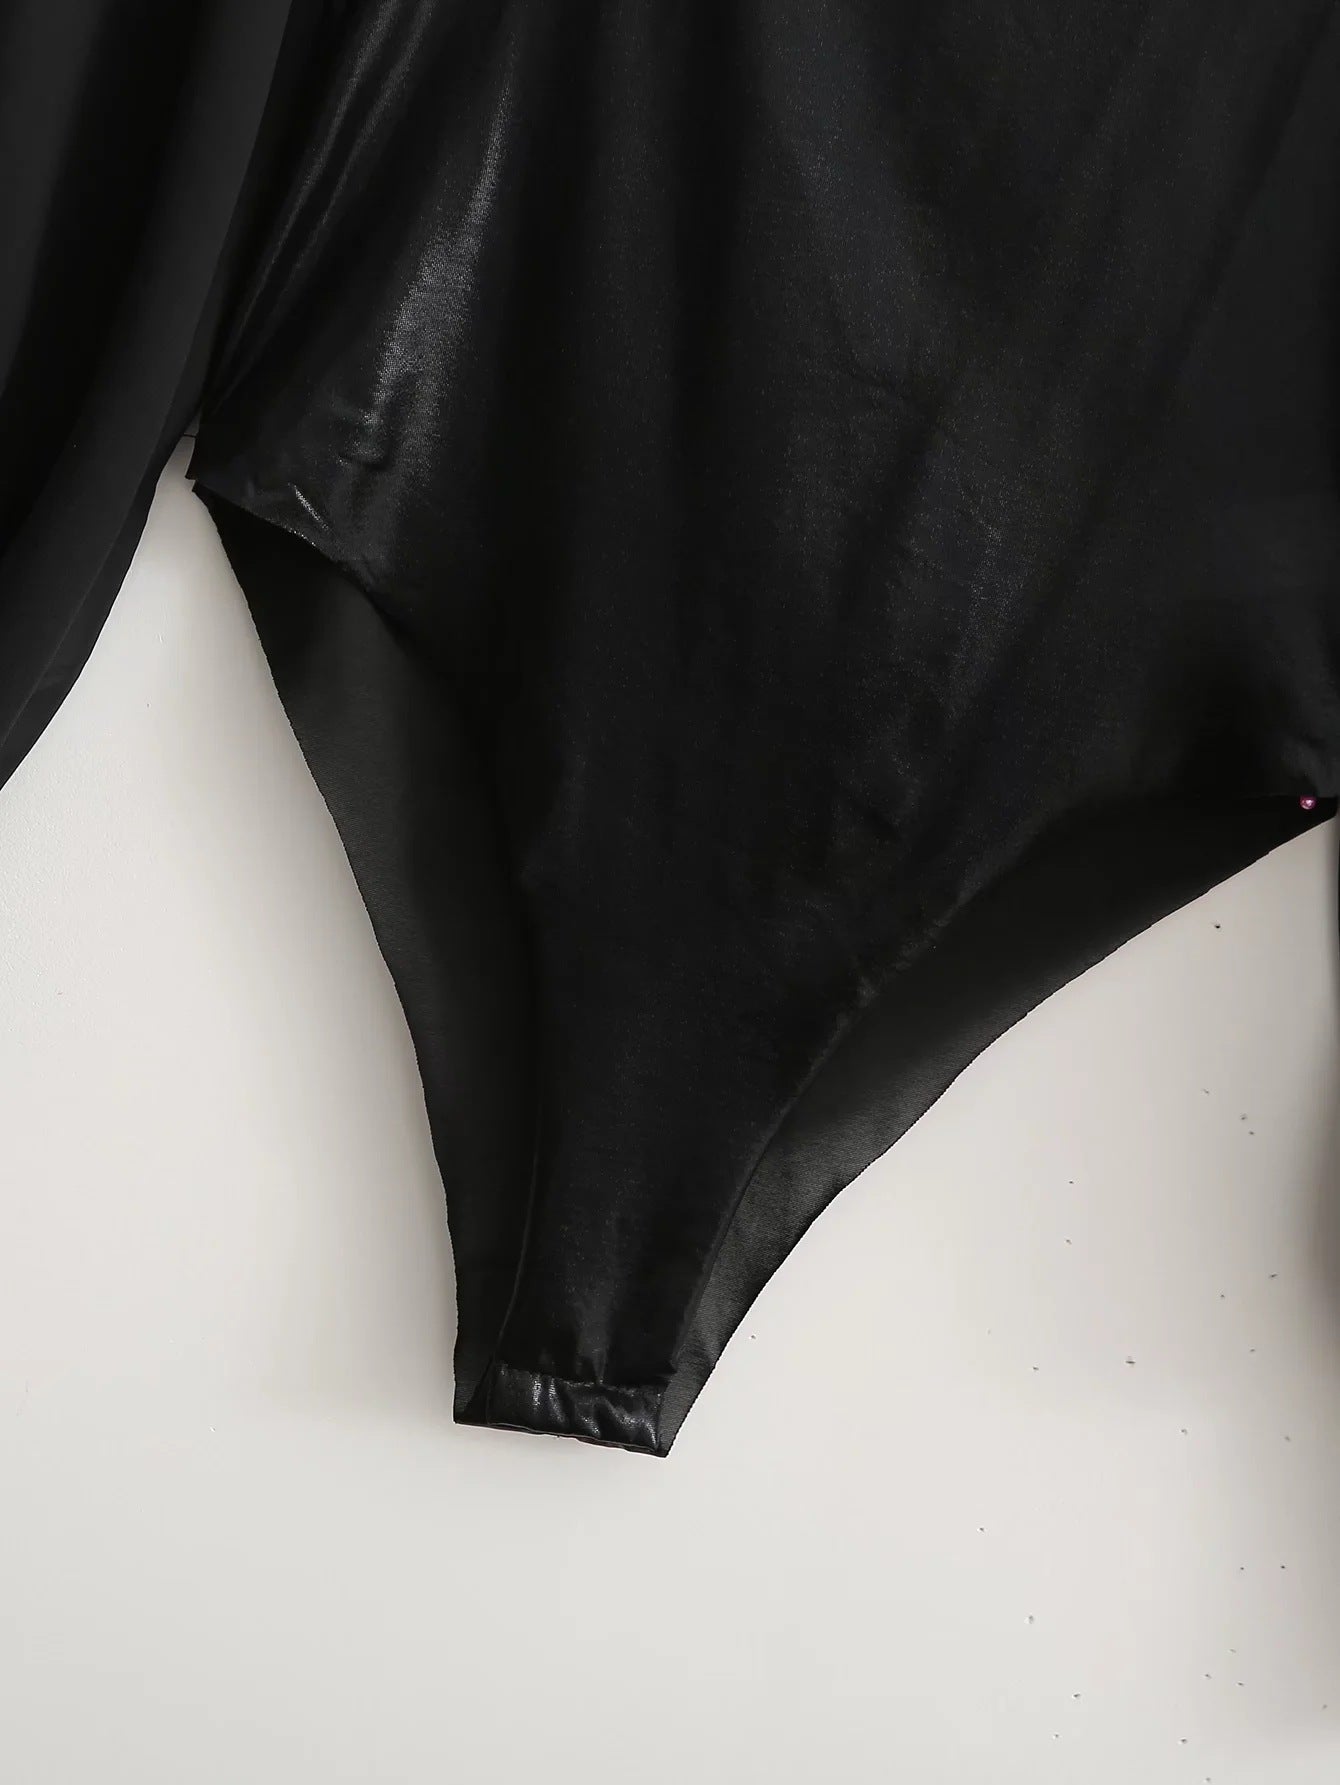 Women's Bell Sleeve Mesh Arm PU Leather Bodysuit Shirt